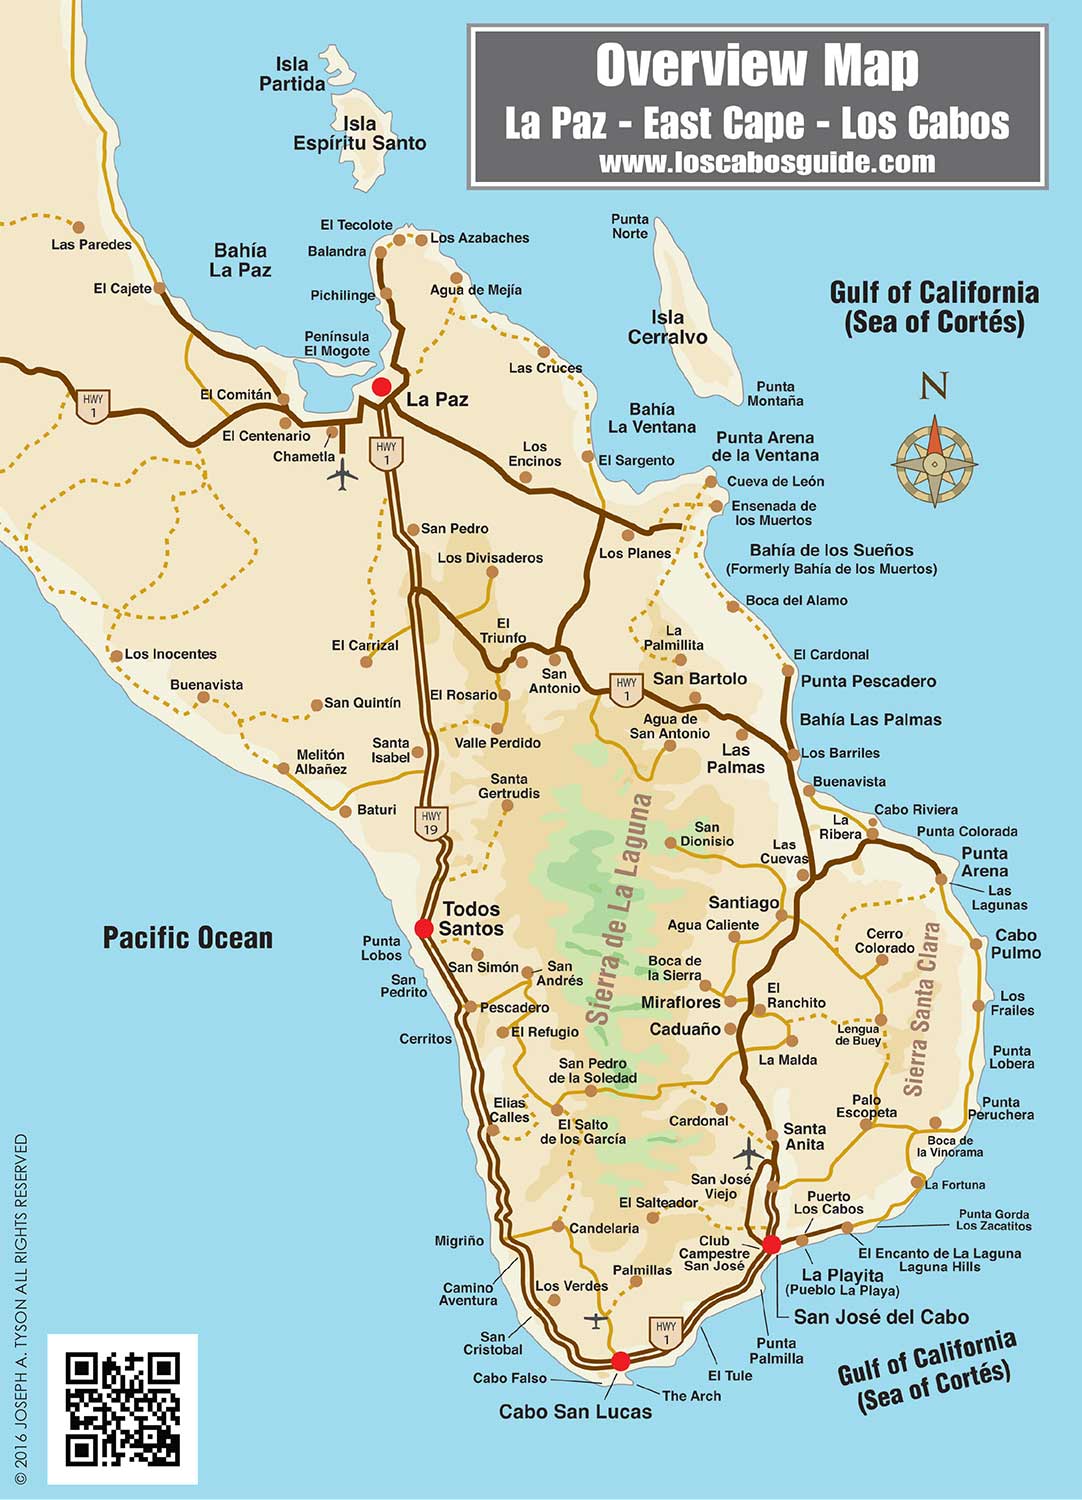 Baja California Sur trail routes